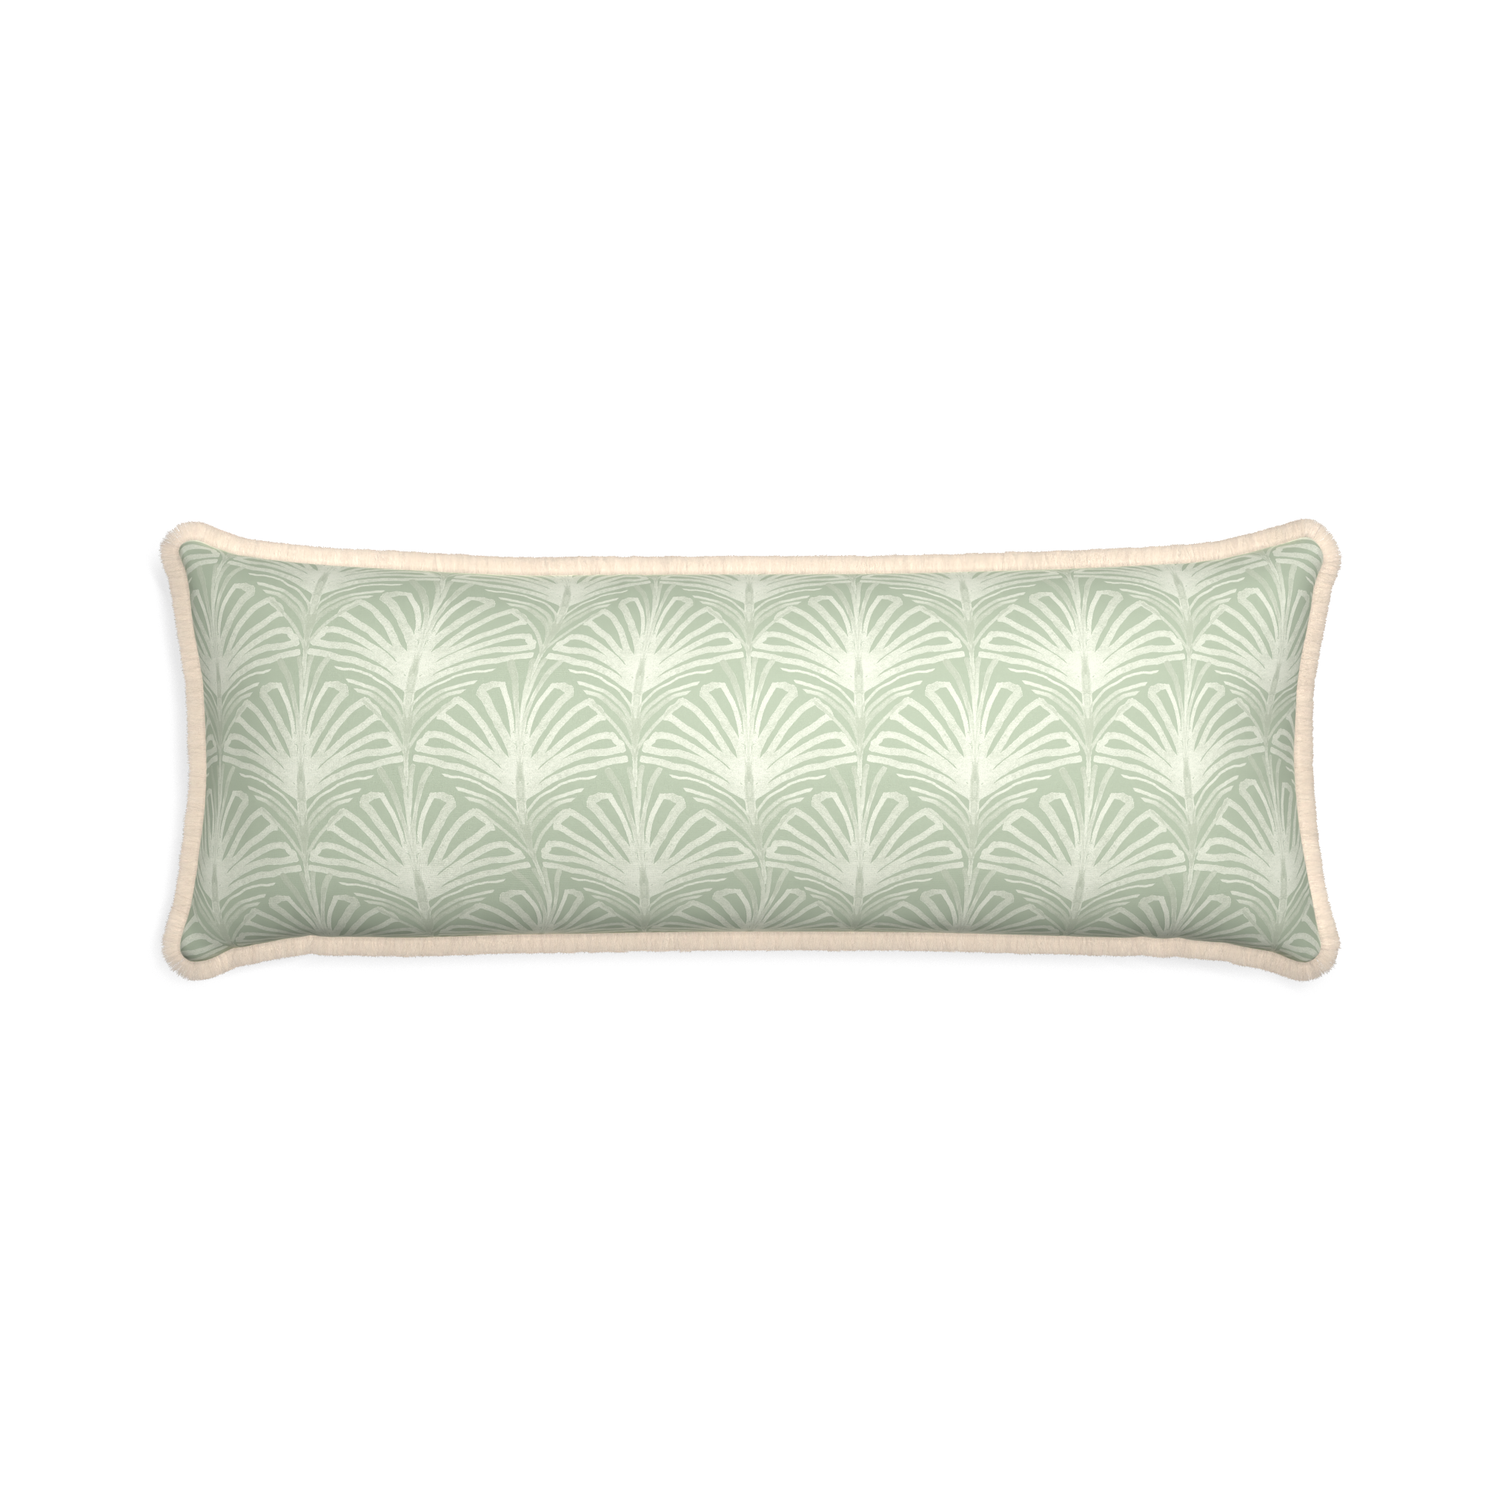 Xl-lumbar suzy sage custom pillow with cream fringe on white background